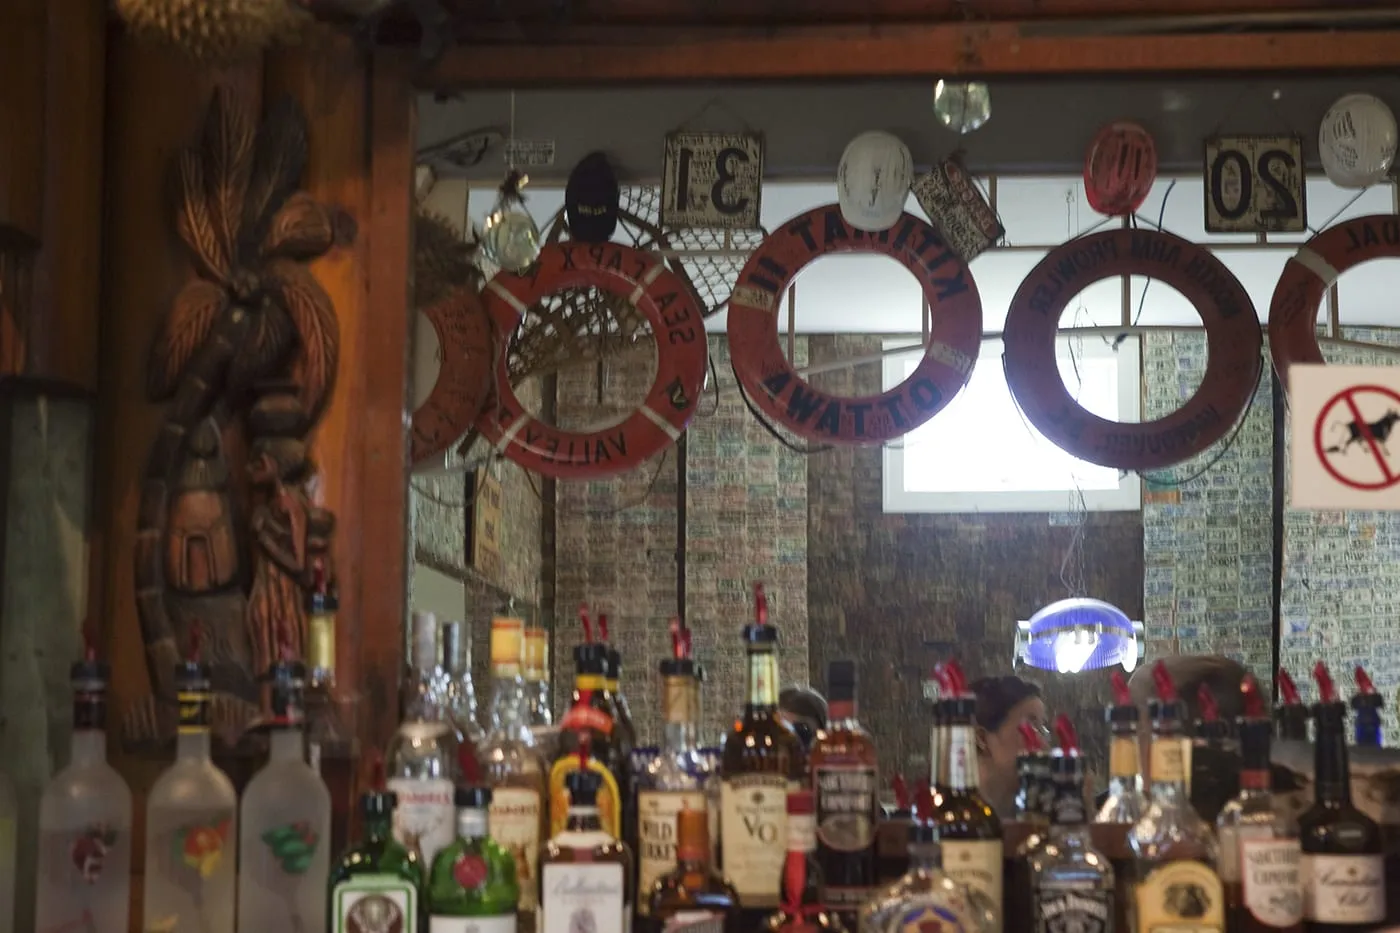 The bar at the Glacier Inn in Hyder, Alaska